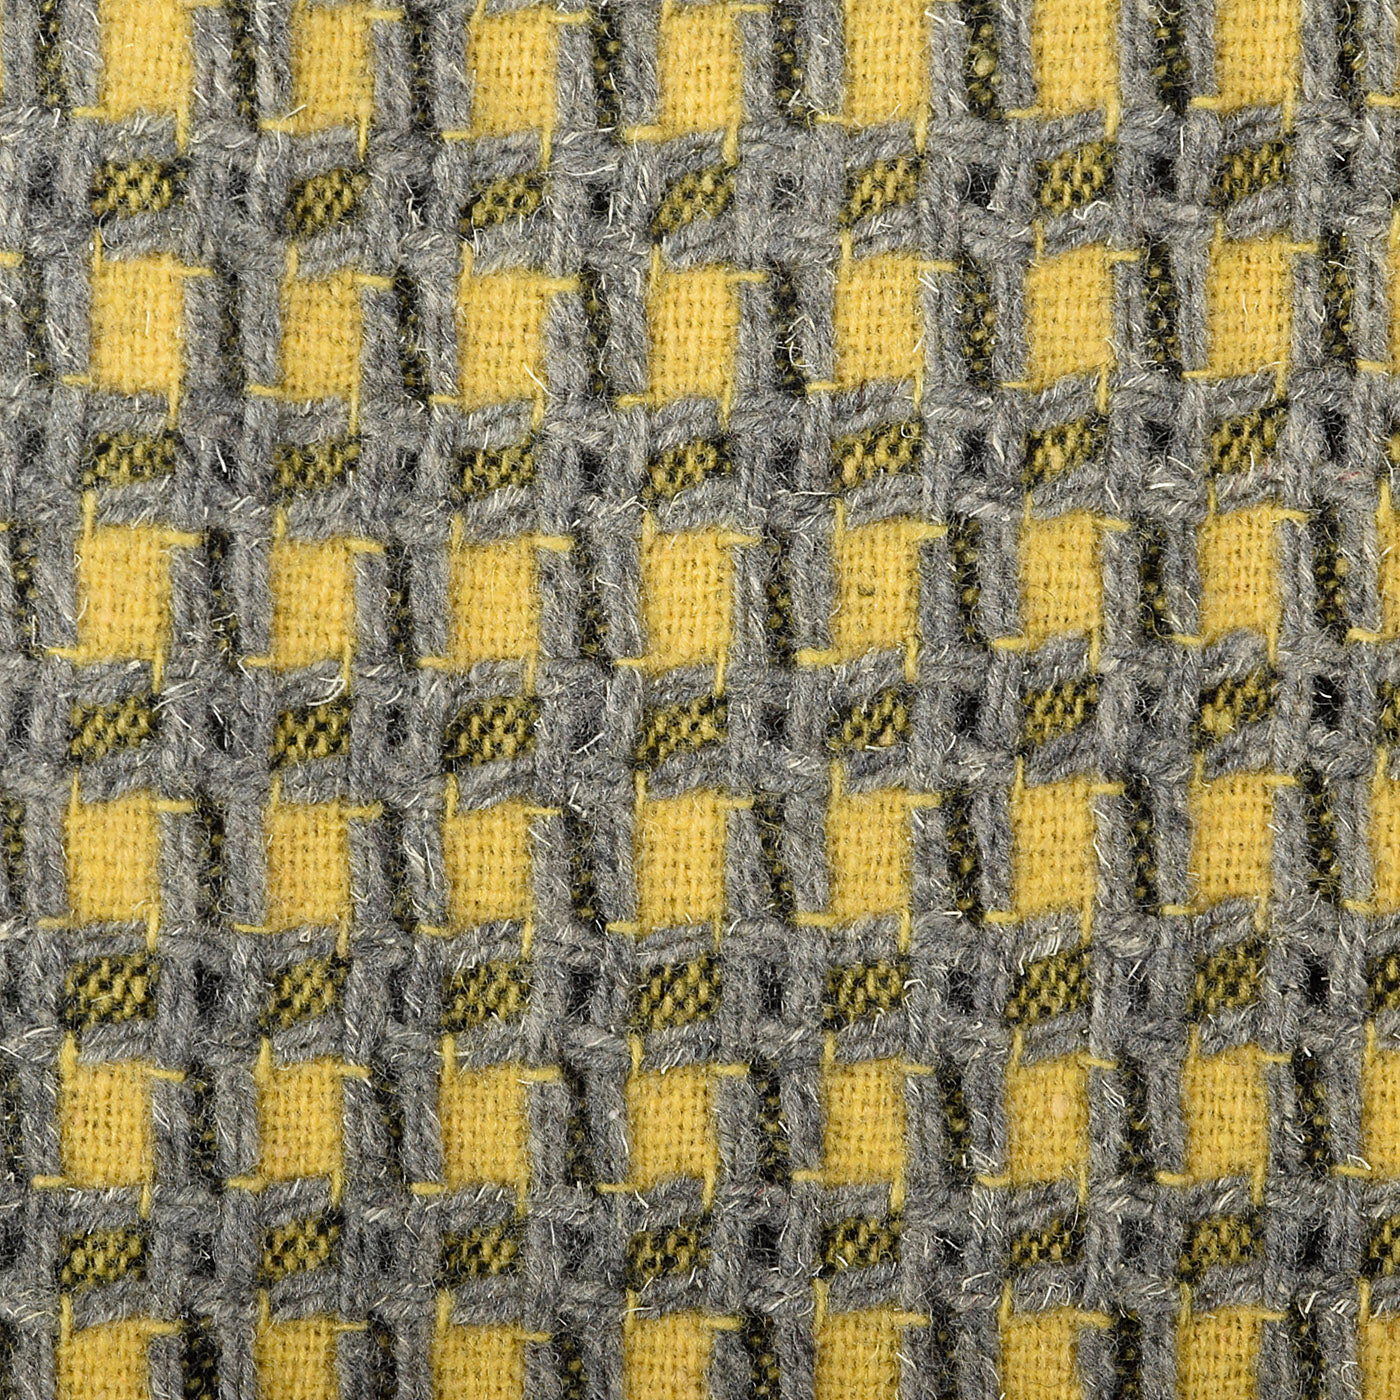 1940s Yellow and Gray Tweed Swing Jacket